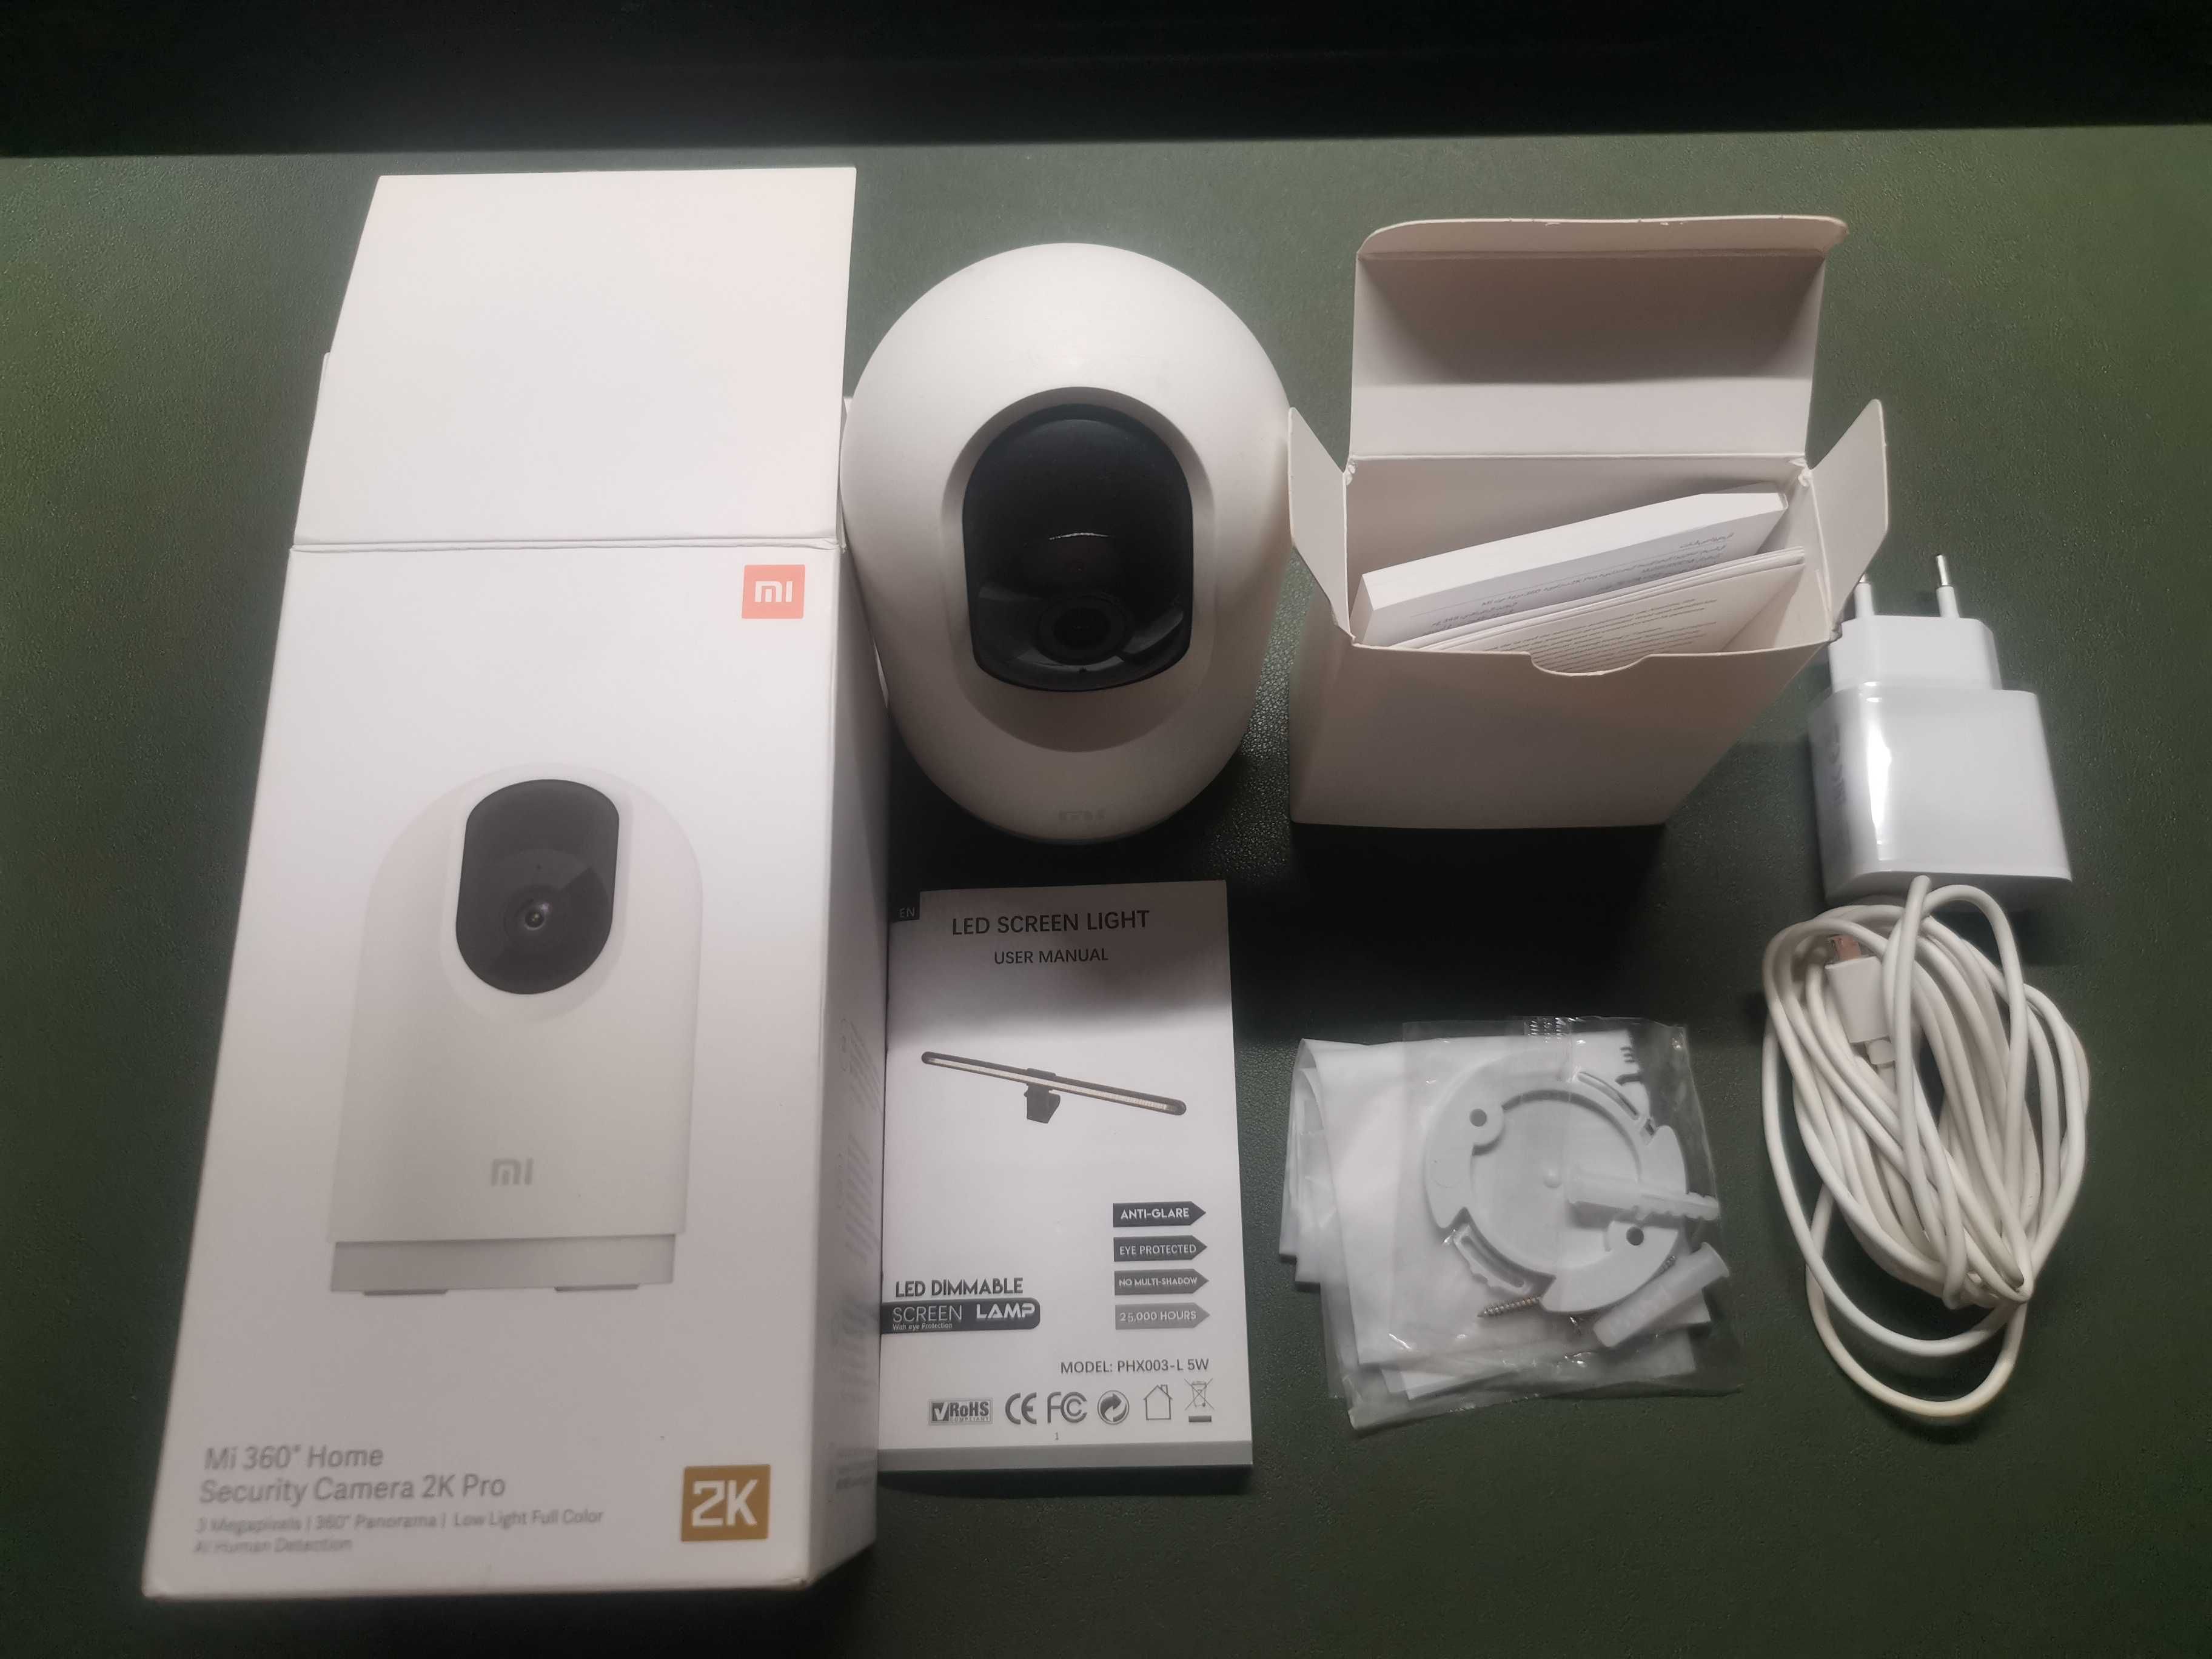 Mi 360 home security camera 2k